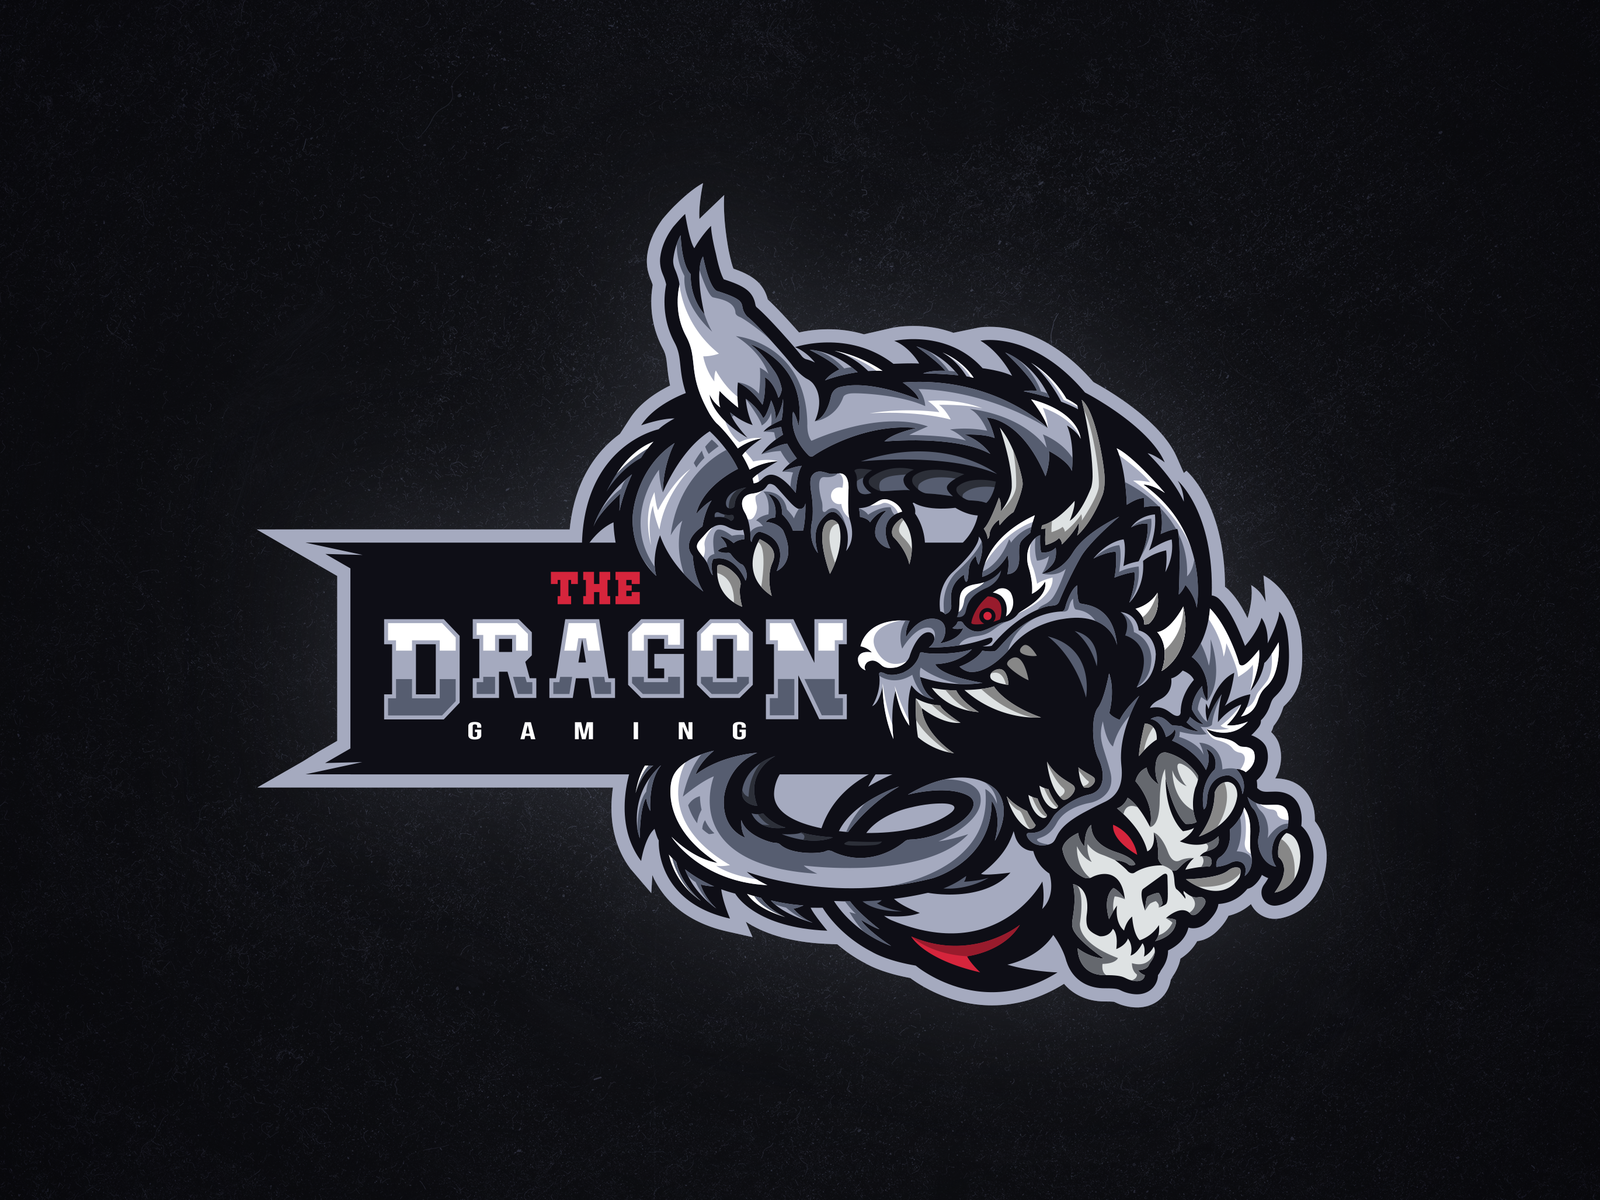 The Dragon Gaming logo. by Lou An Phạm on Dribbble